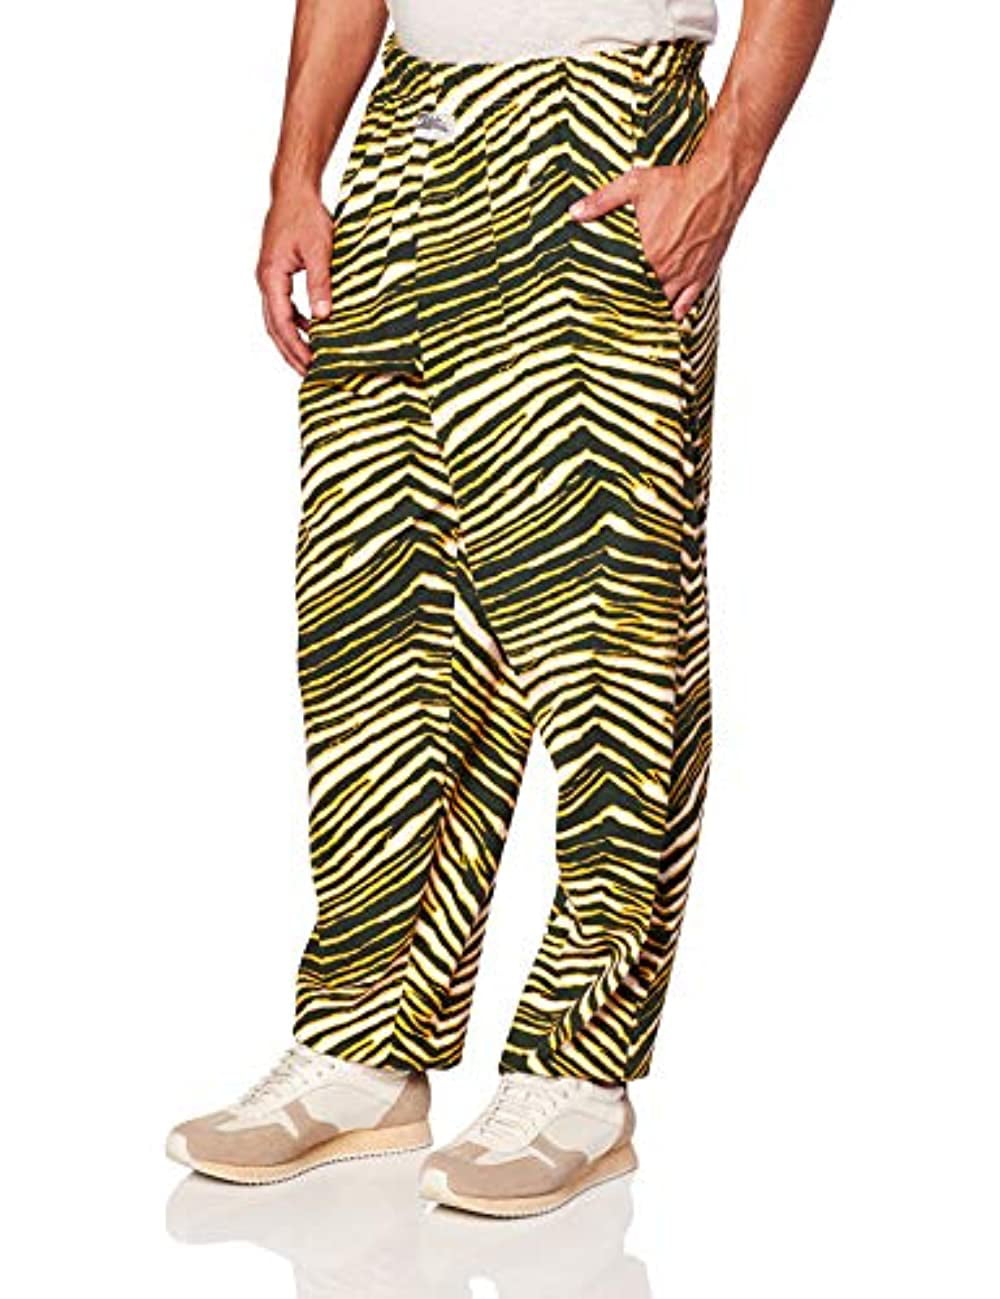 Zubaz Men s Classic Zebra Printed Athletic Lounge Pants Green Gold S